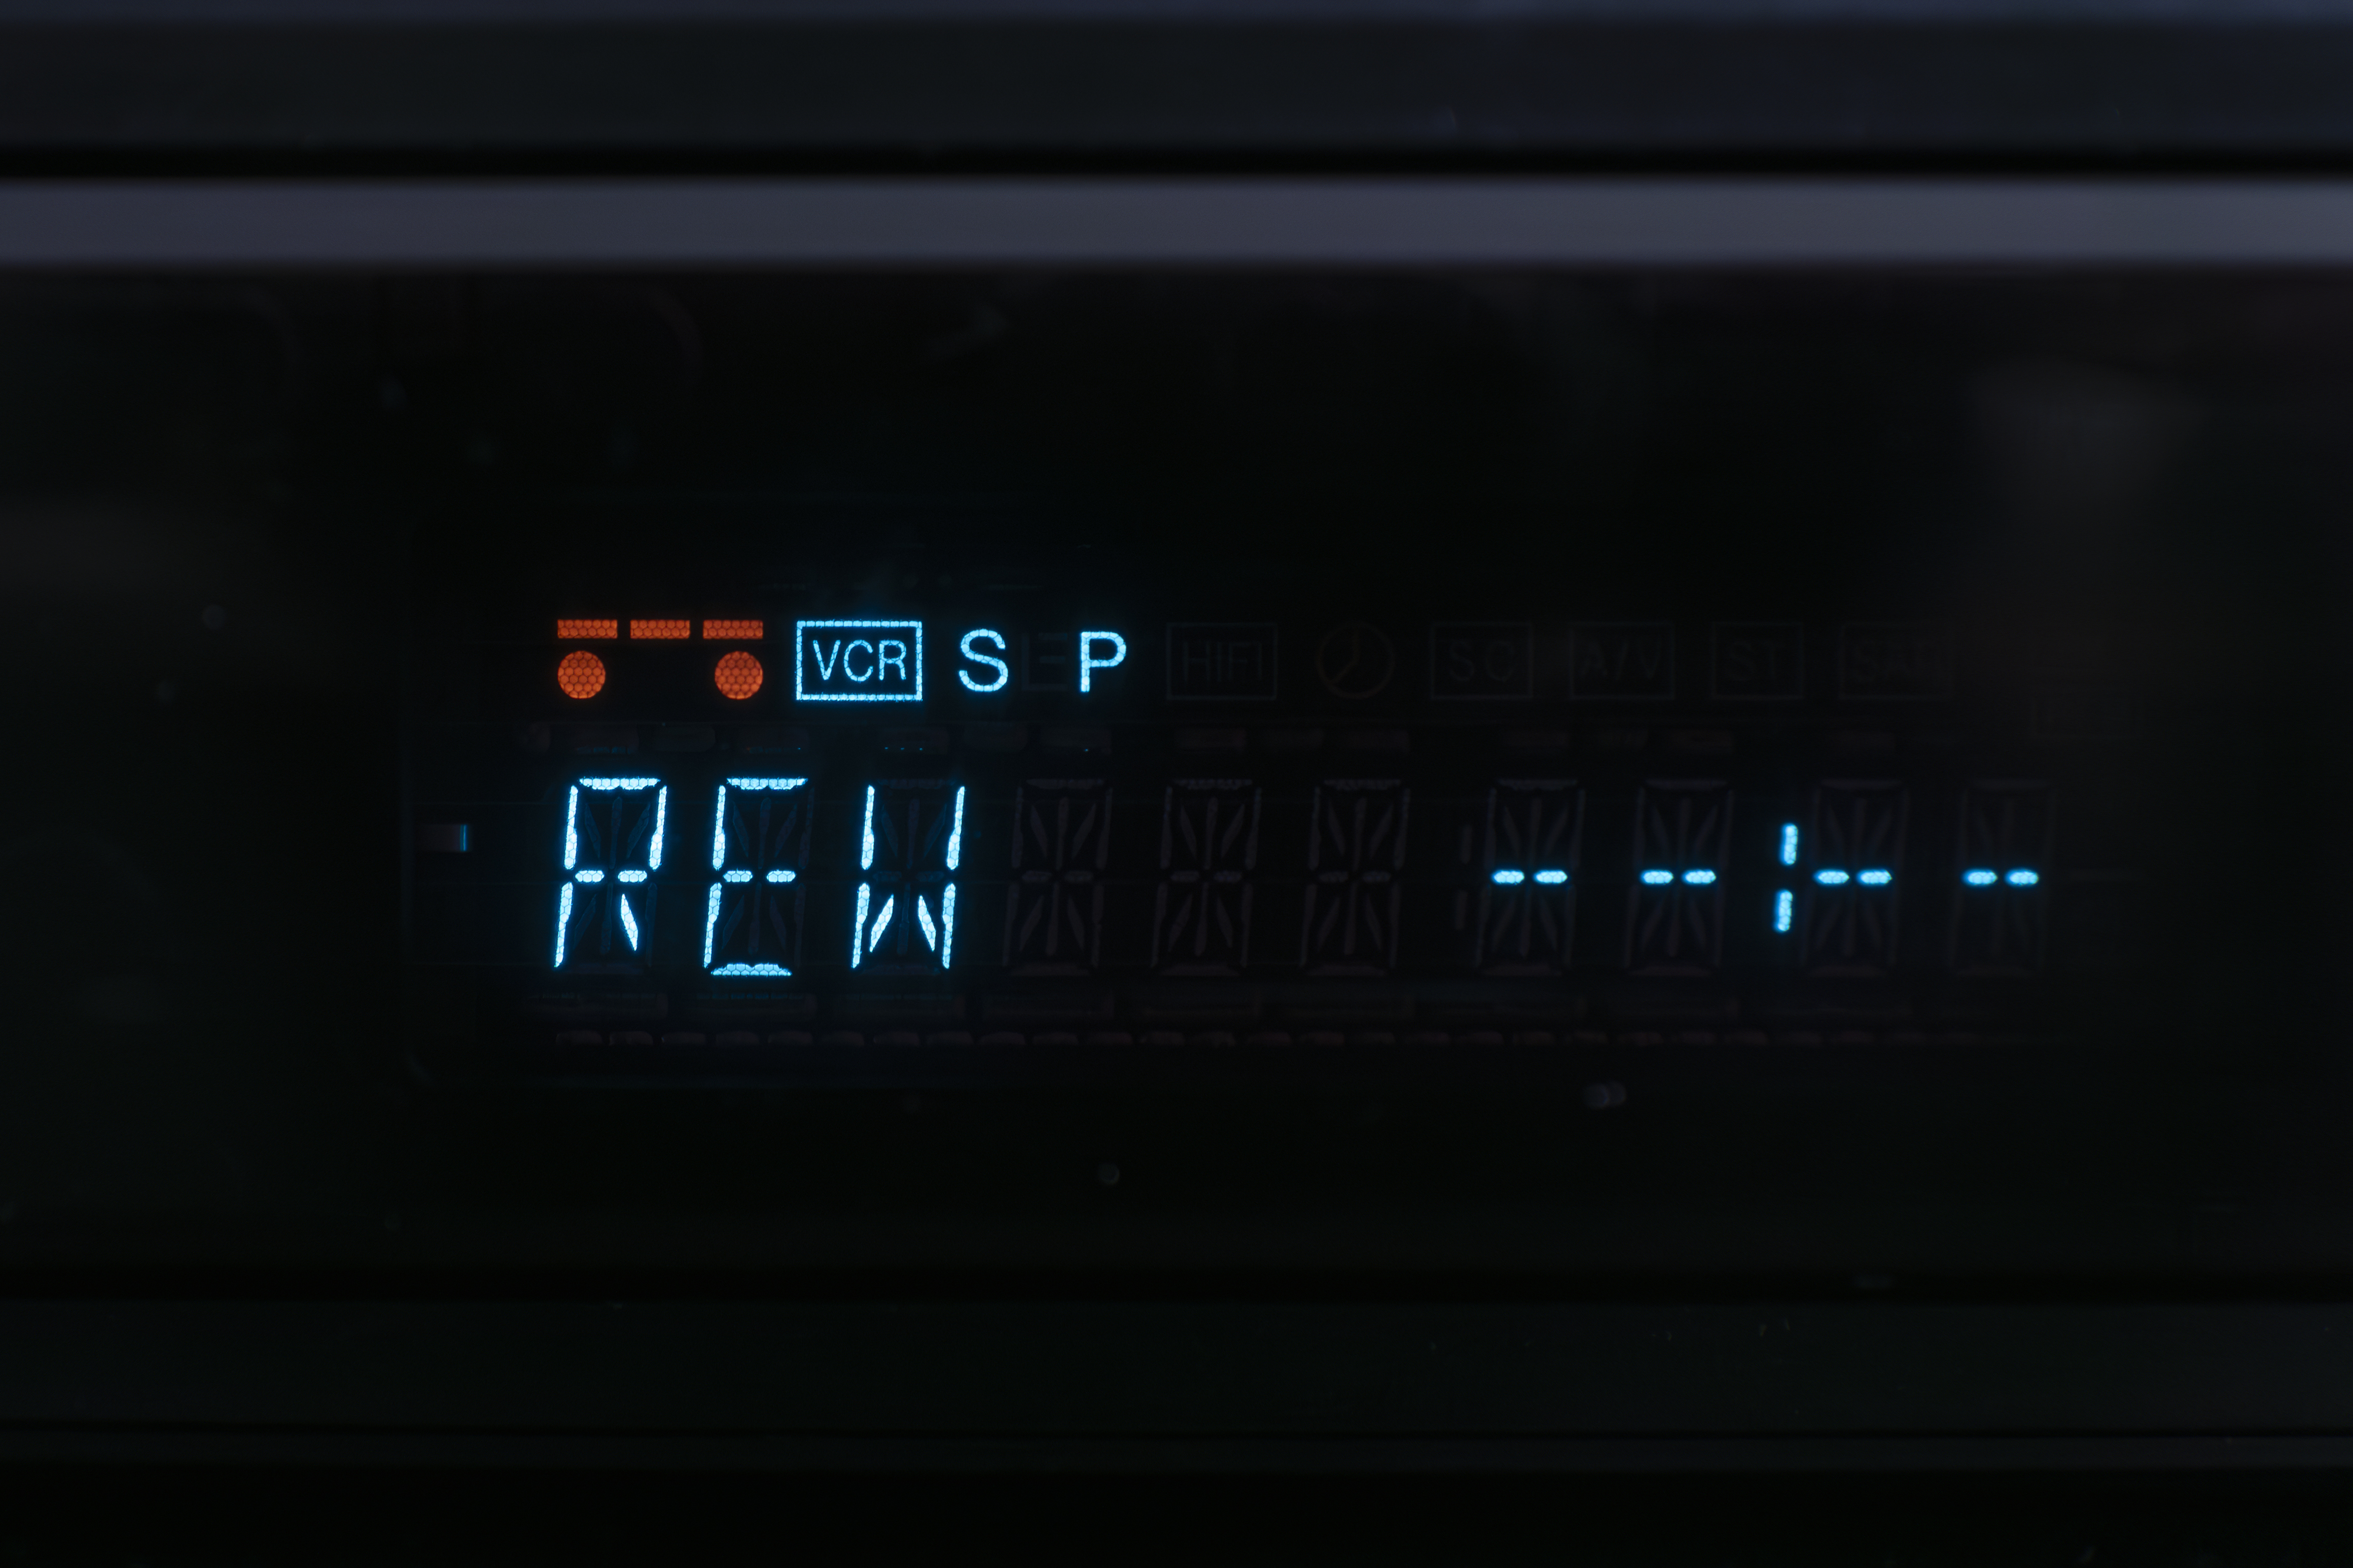 a digital VCR display rewinding